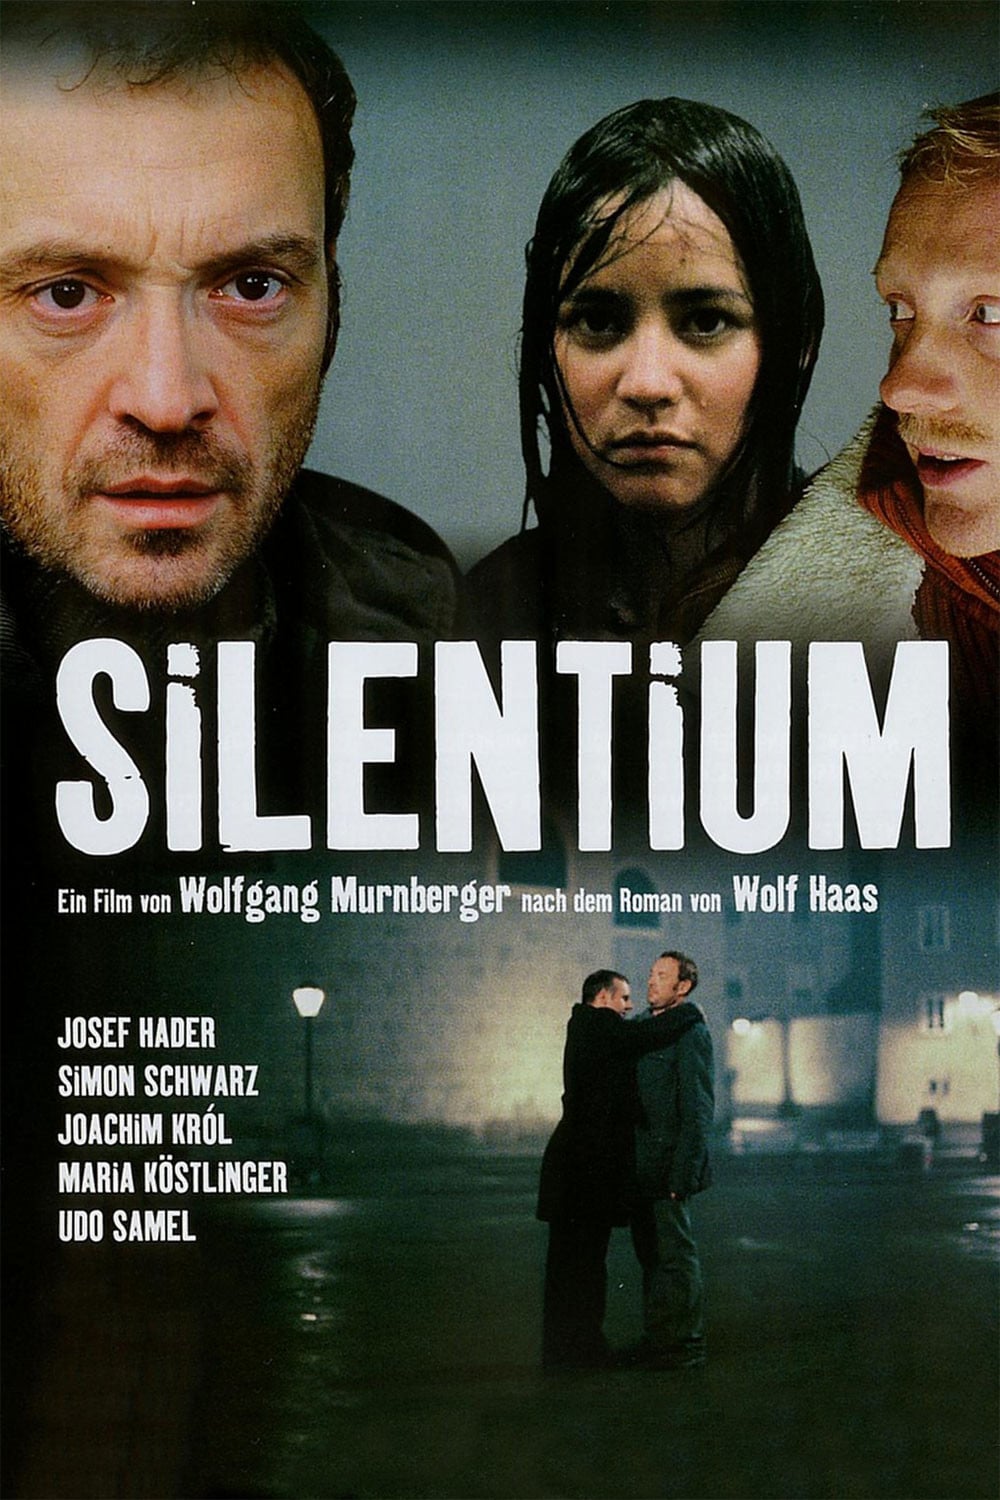 Plakat von "Silentium"